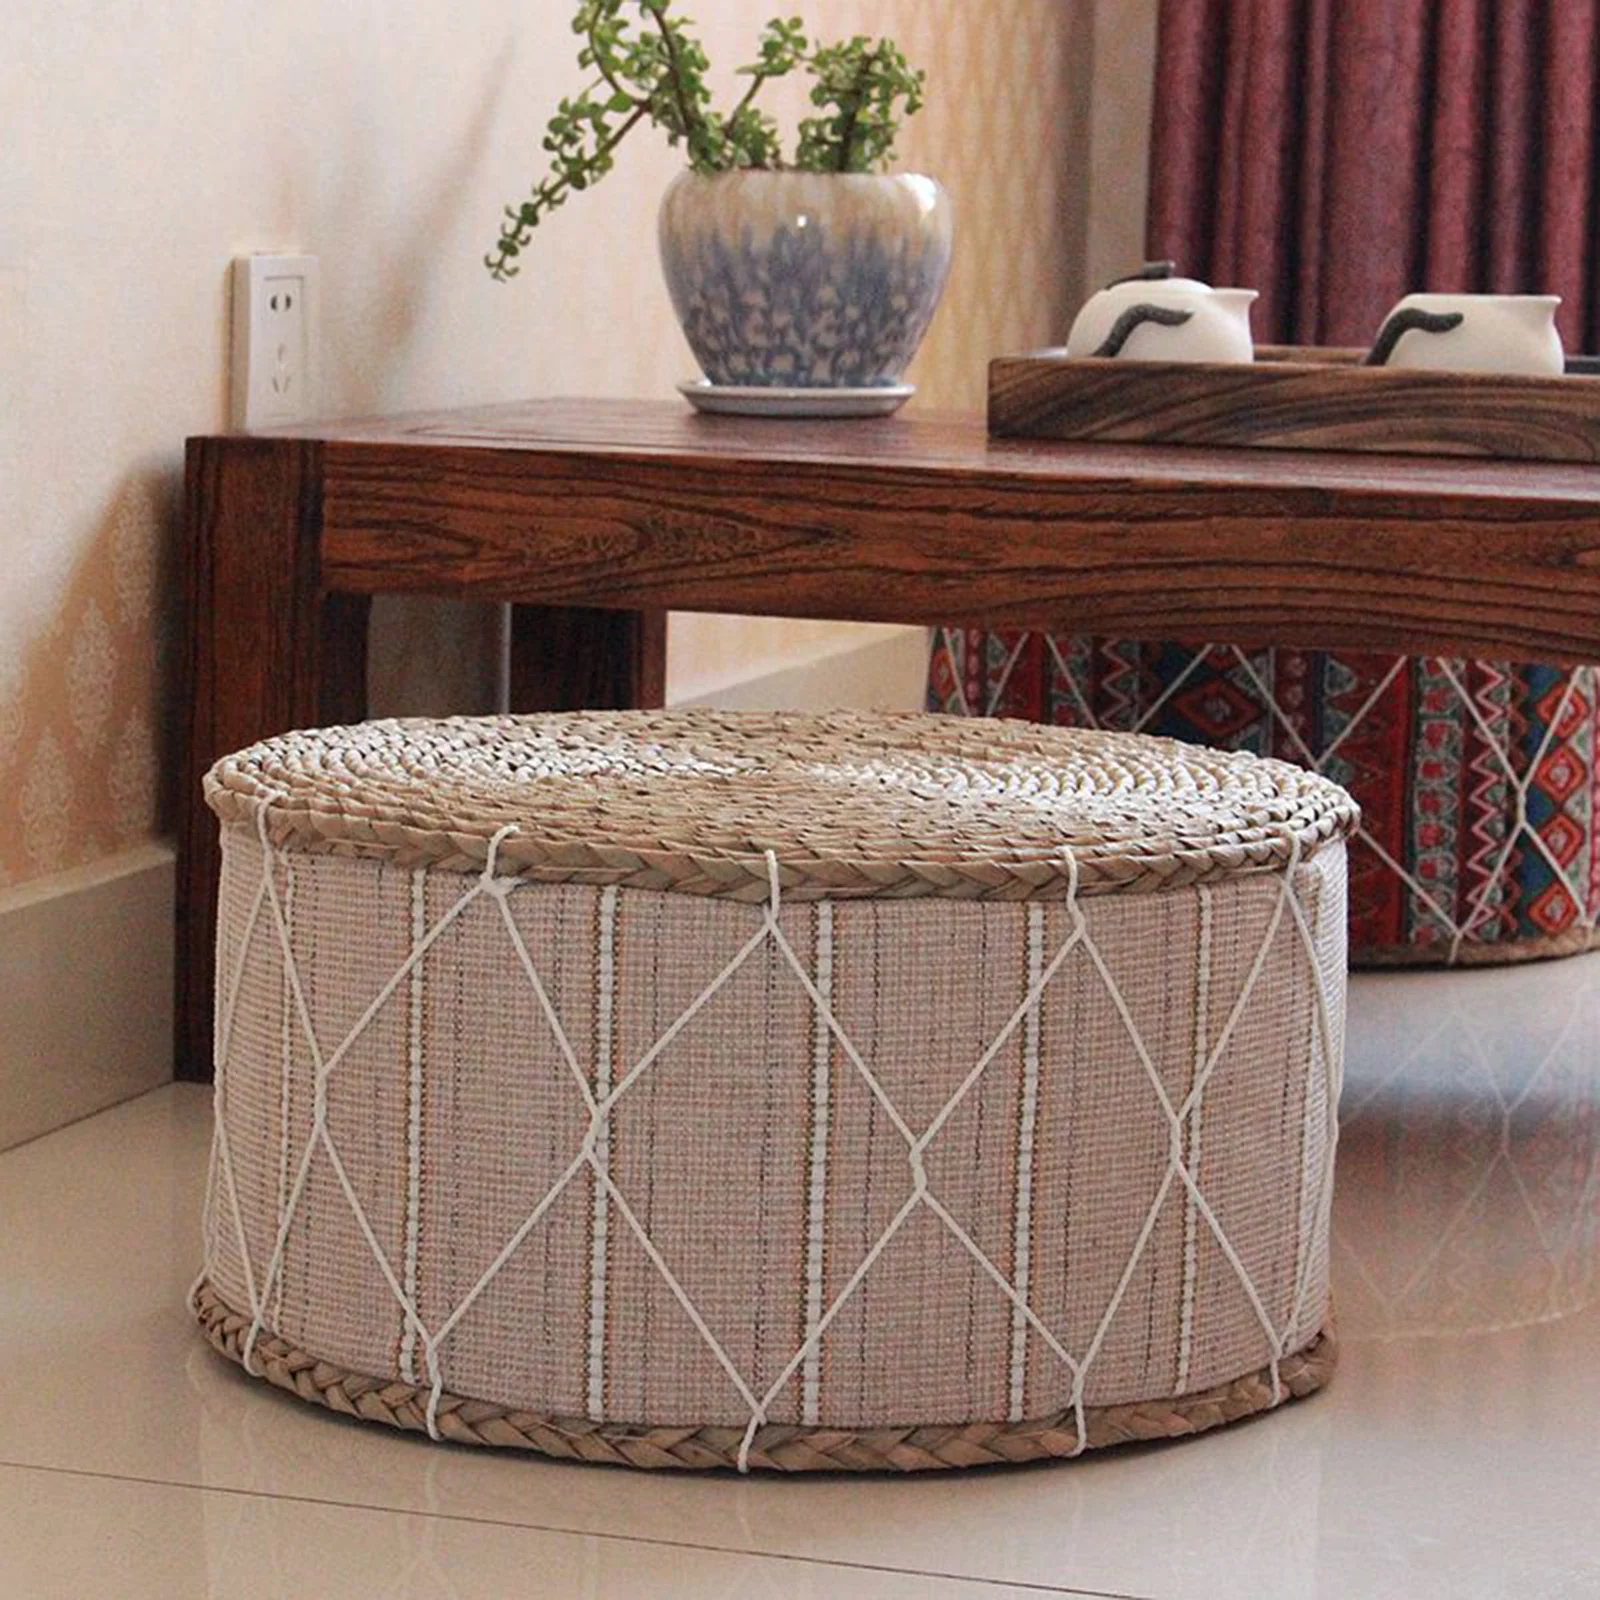 Japanese Style Futon Floor Pillow Round Meditation Cushion Footstool Ottoman Seat Pouf for Living Room Bedroom Yoga Room